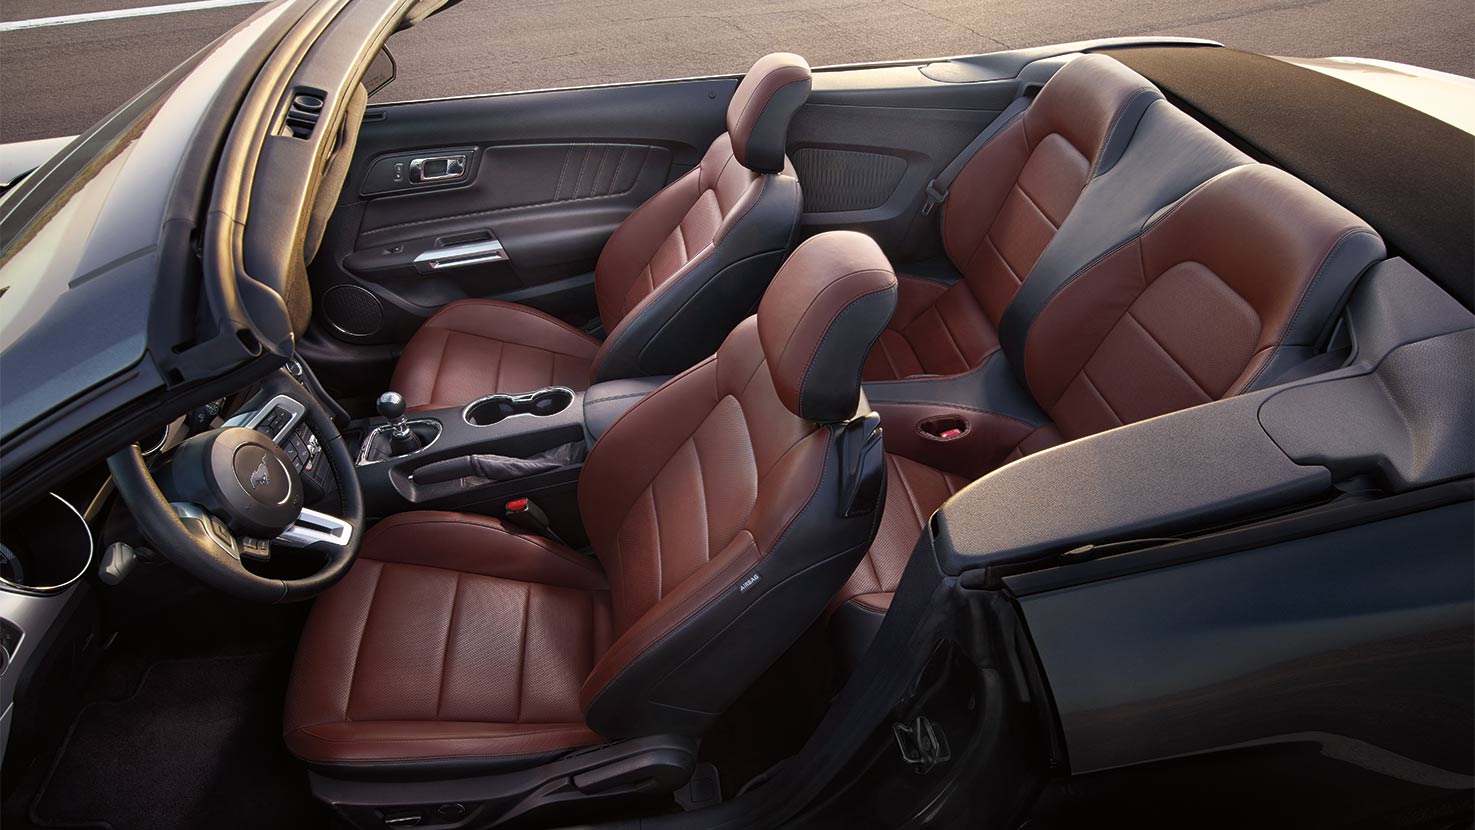 HD photos vehicles, ford mustang, steering wheel, convertible